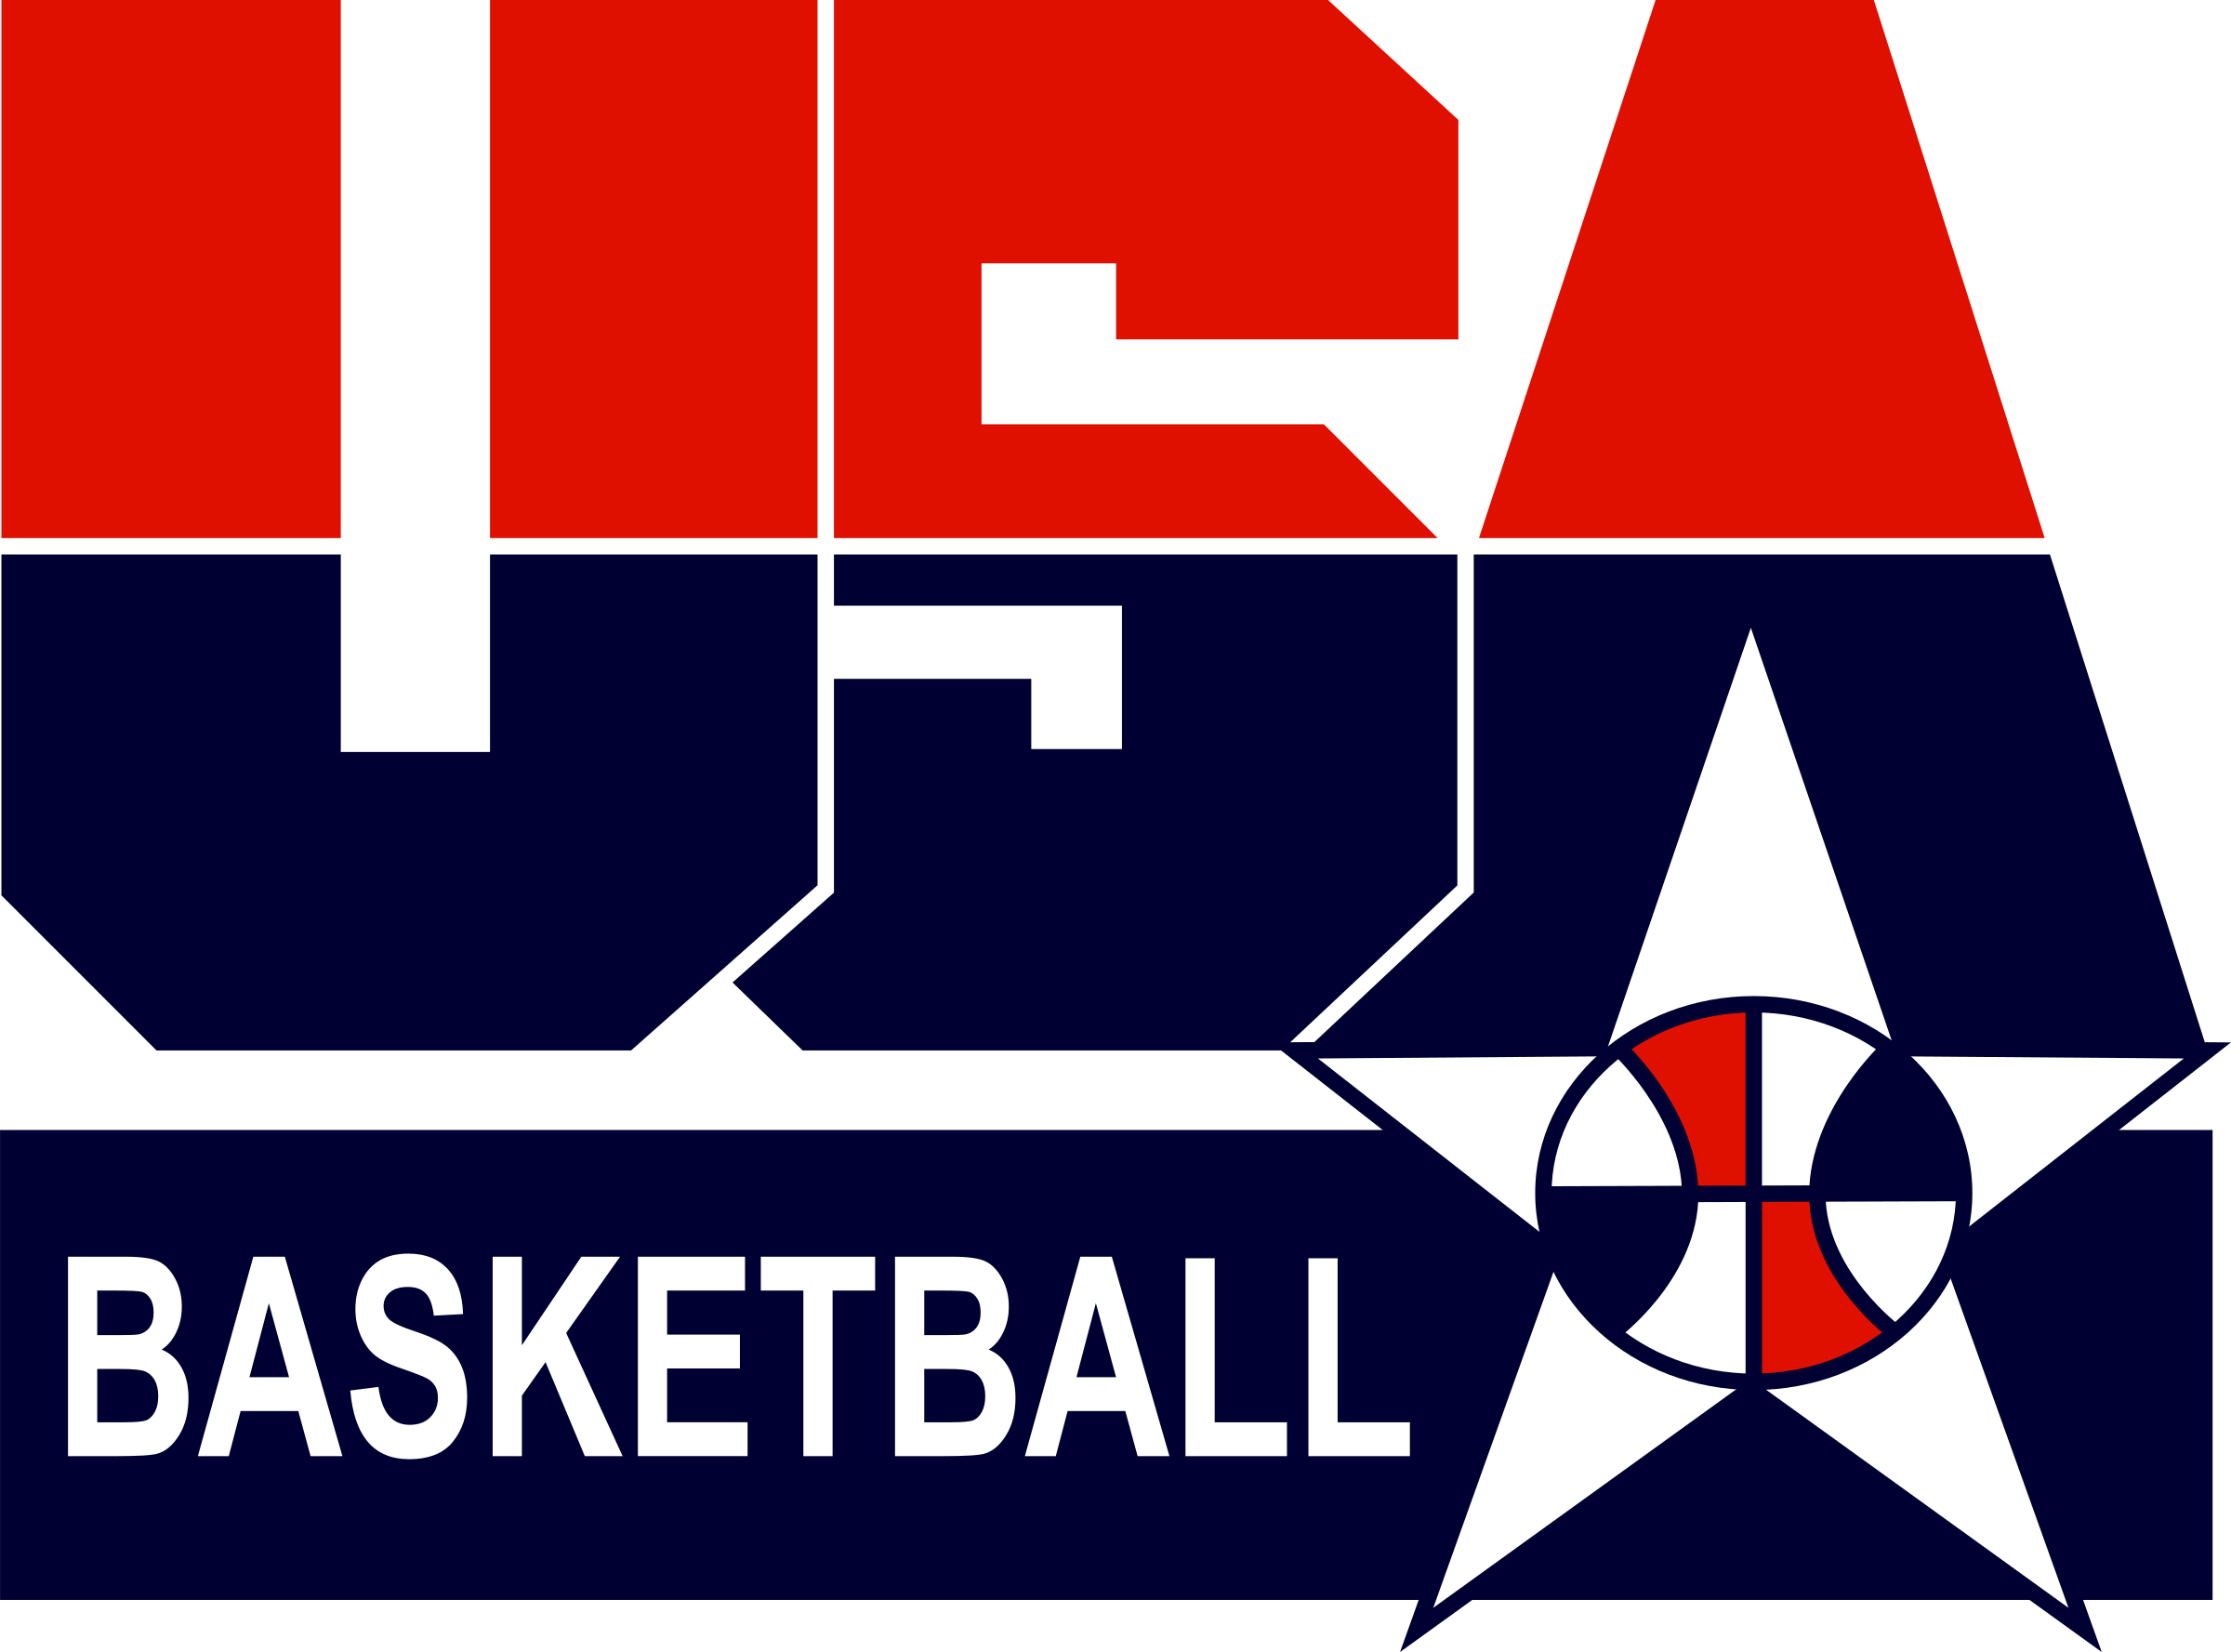 Transparent Basketball Logo - USA Basketball Logo PNG Transparent & SVG Vector